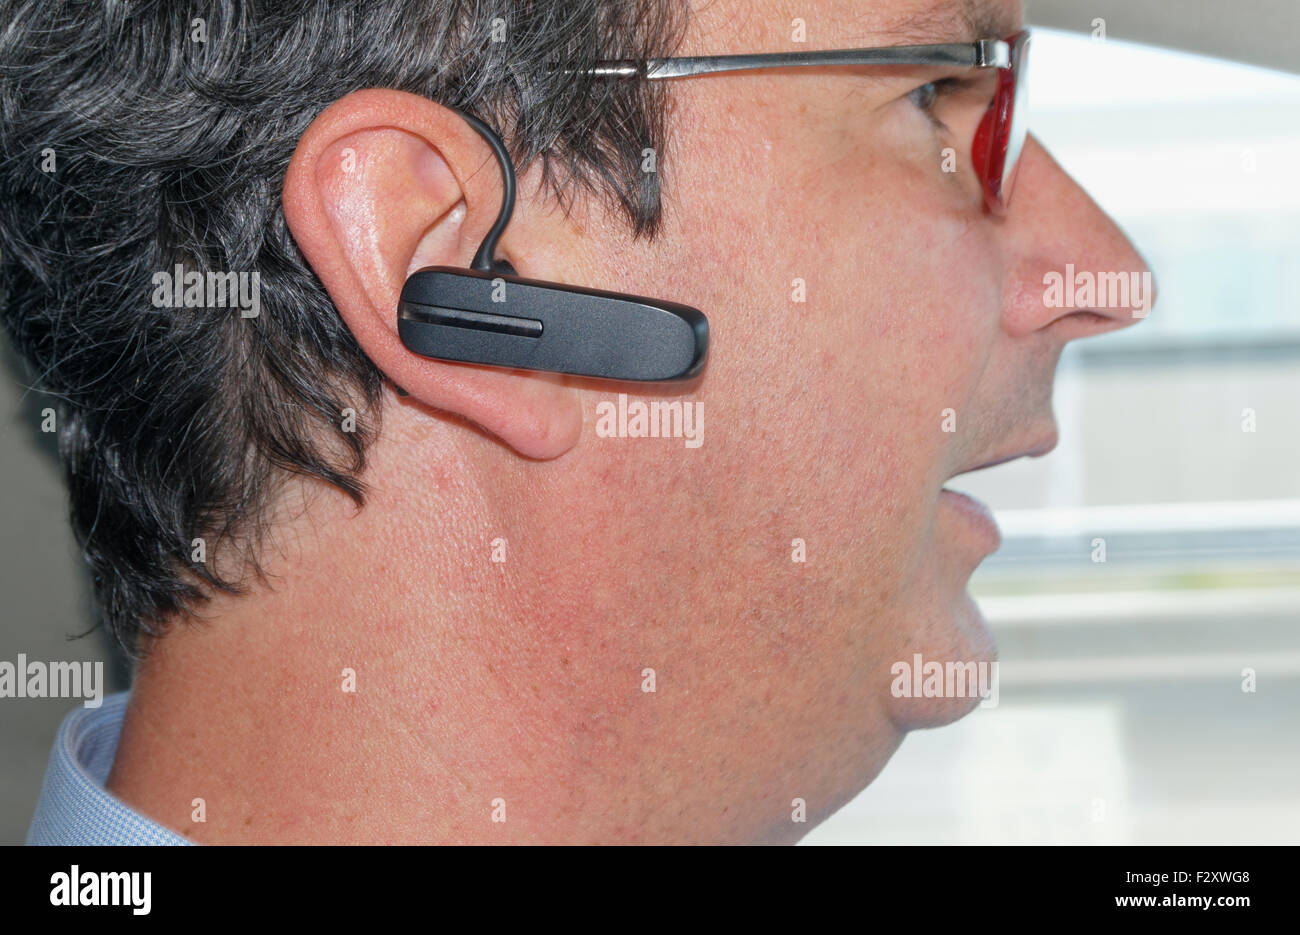 Wireless bluetooth hands free headset Stock Photo